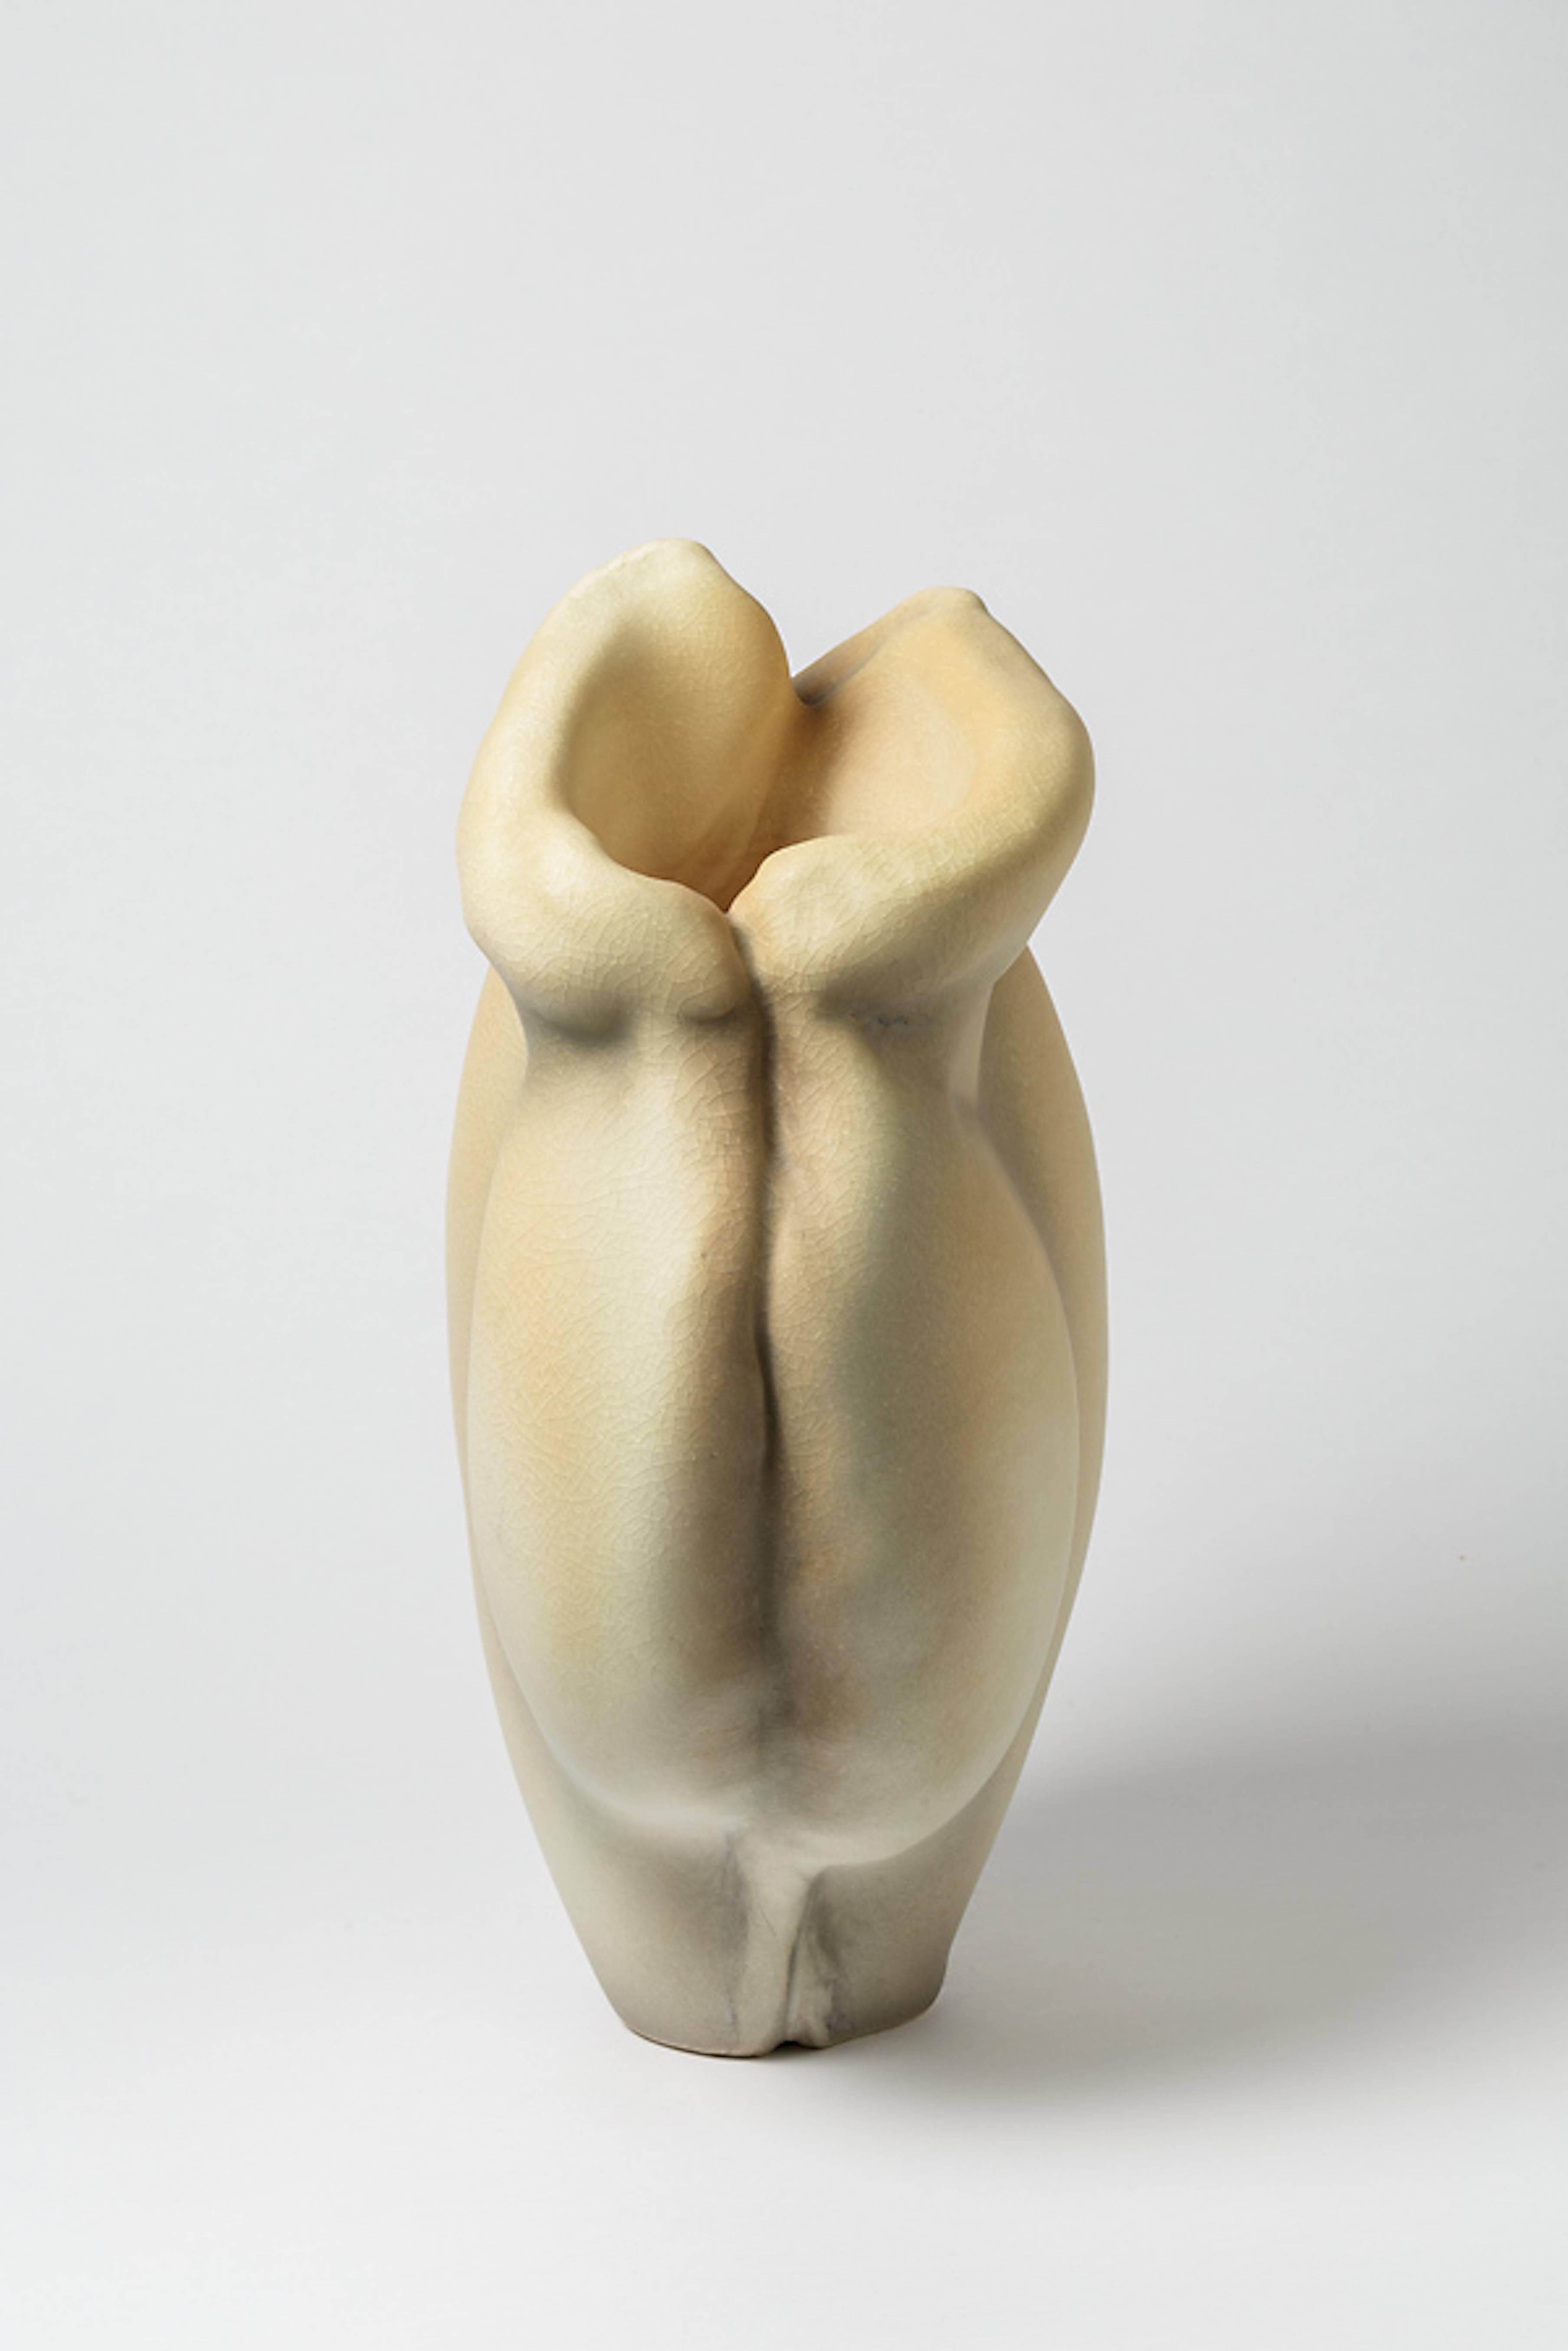 French Porcelain Sculpture by Wayne Fischer, circa 2016